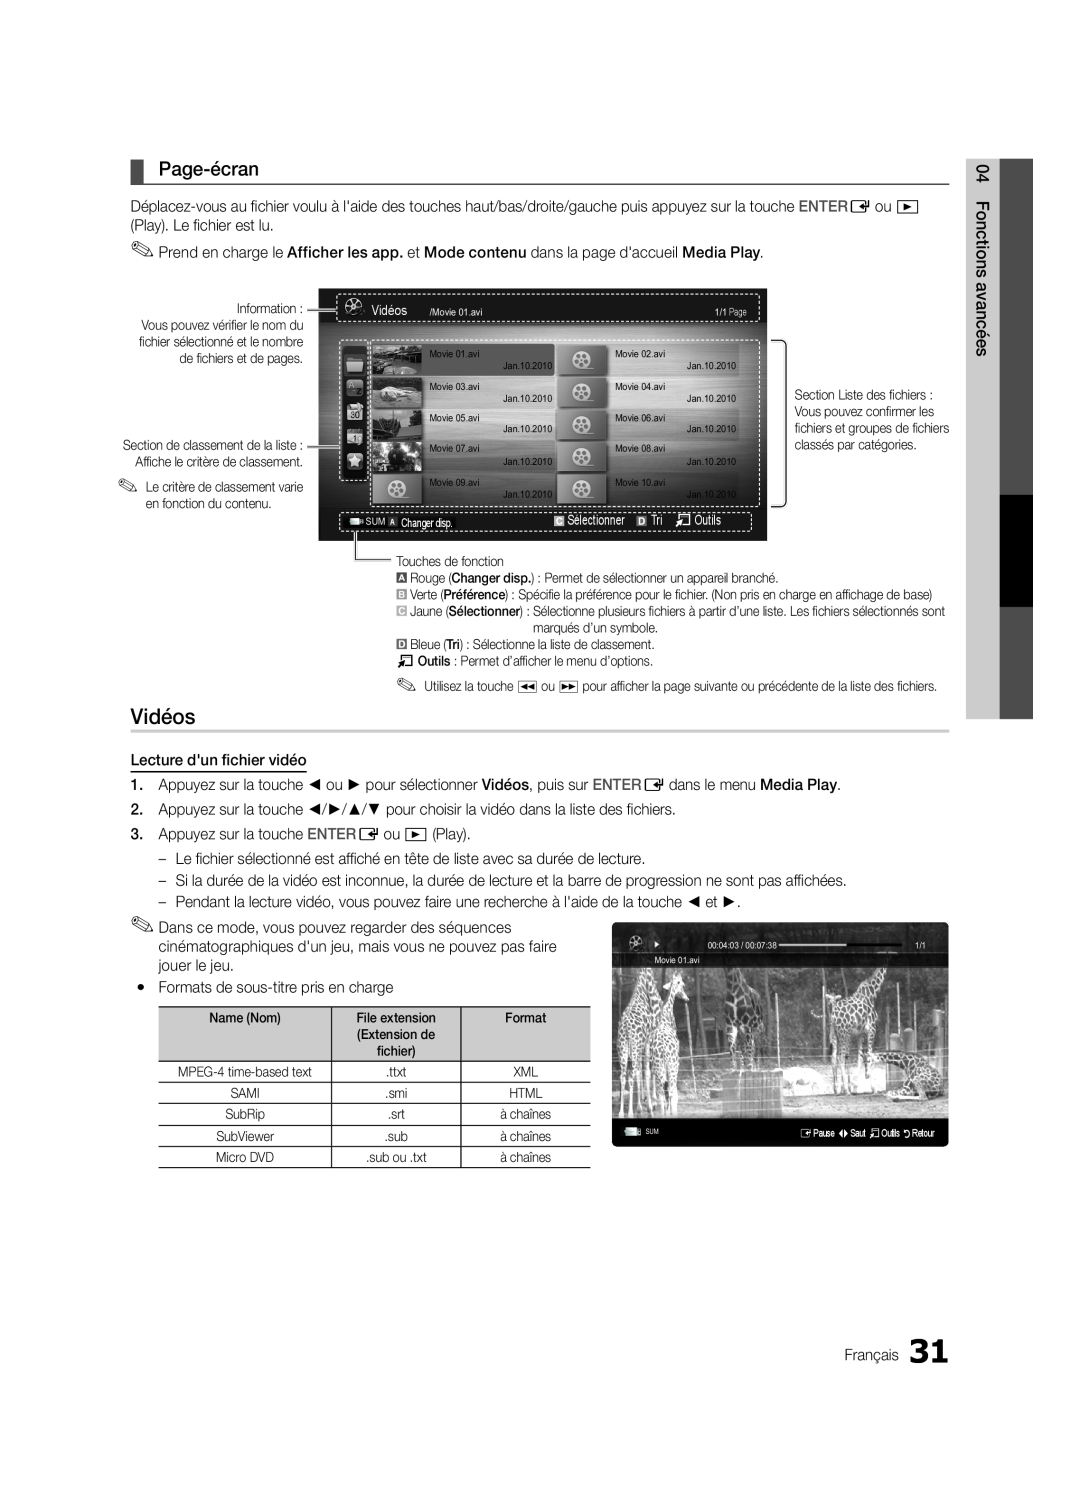 Samsung LN32C550 user manual Vidéos, Page-écran 